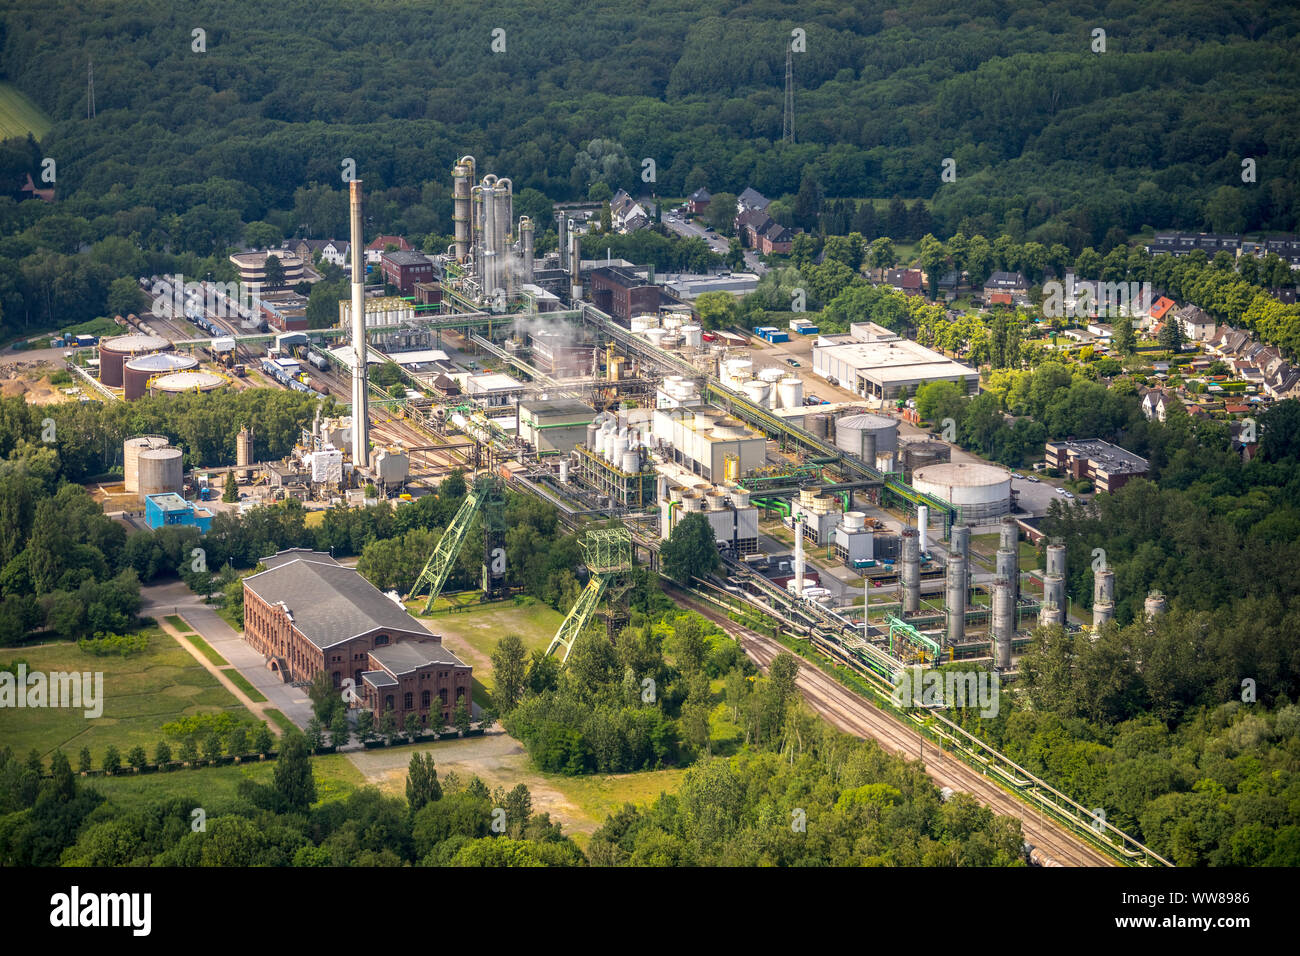 Aerial view, historic machine hall Zweckel, venue, next to chemical plant Ineos Phenol, headframes Schacht 1 + 2 Mine Zweckel, Gladbeck, Ruhrgebiet, North Rhine-Westphalia, Germany Stock Photo